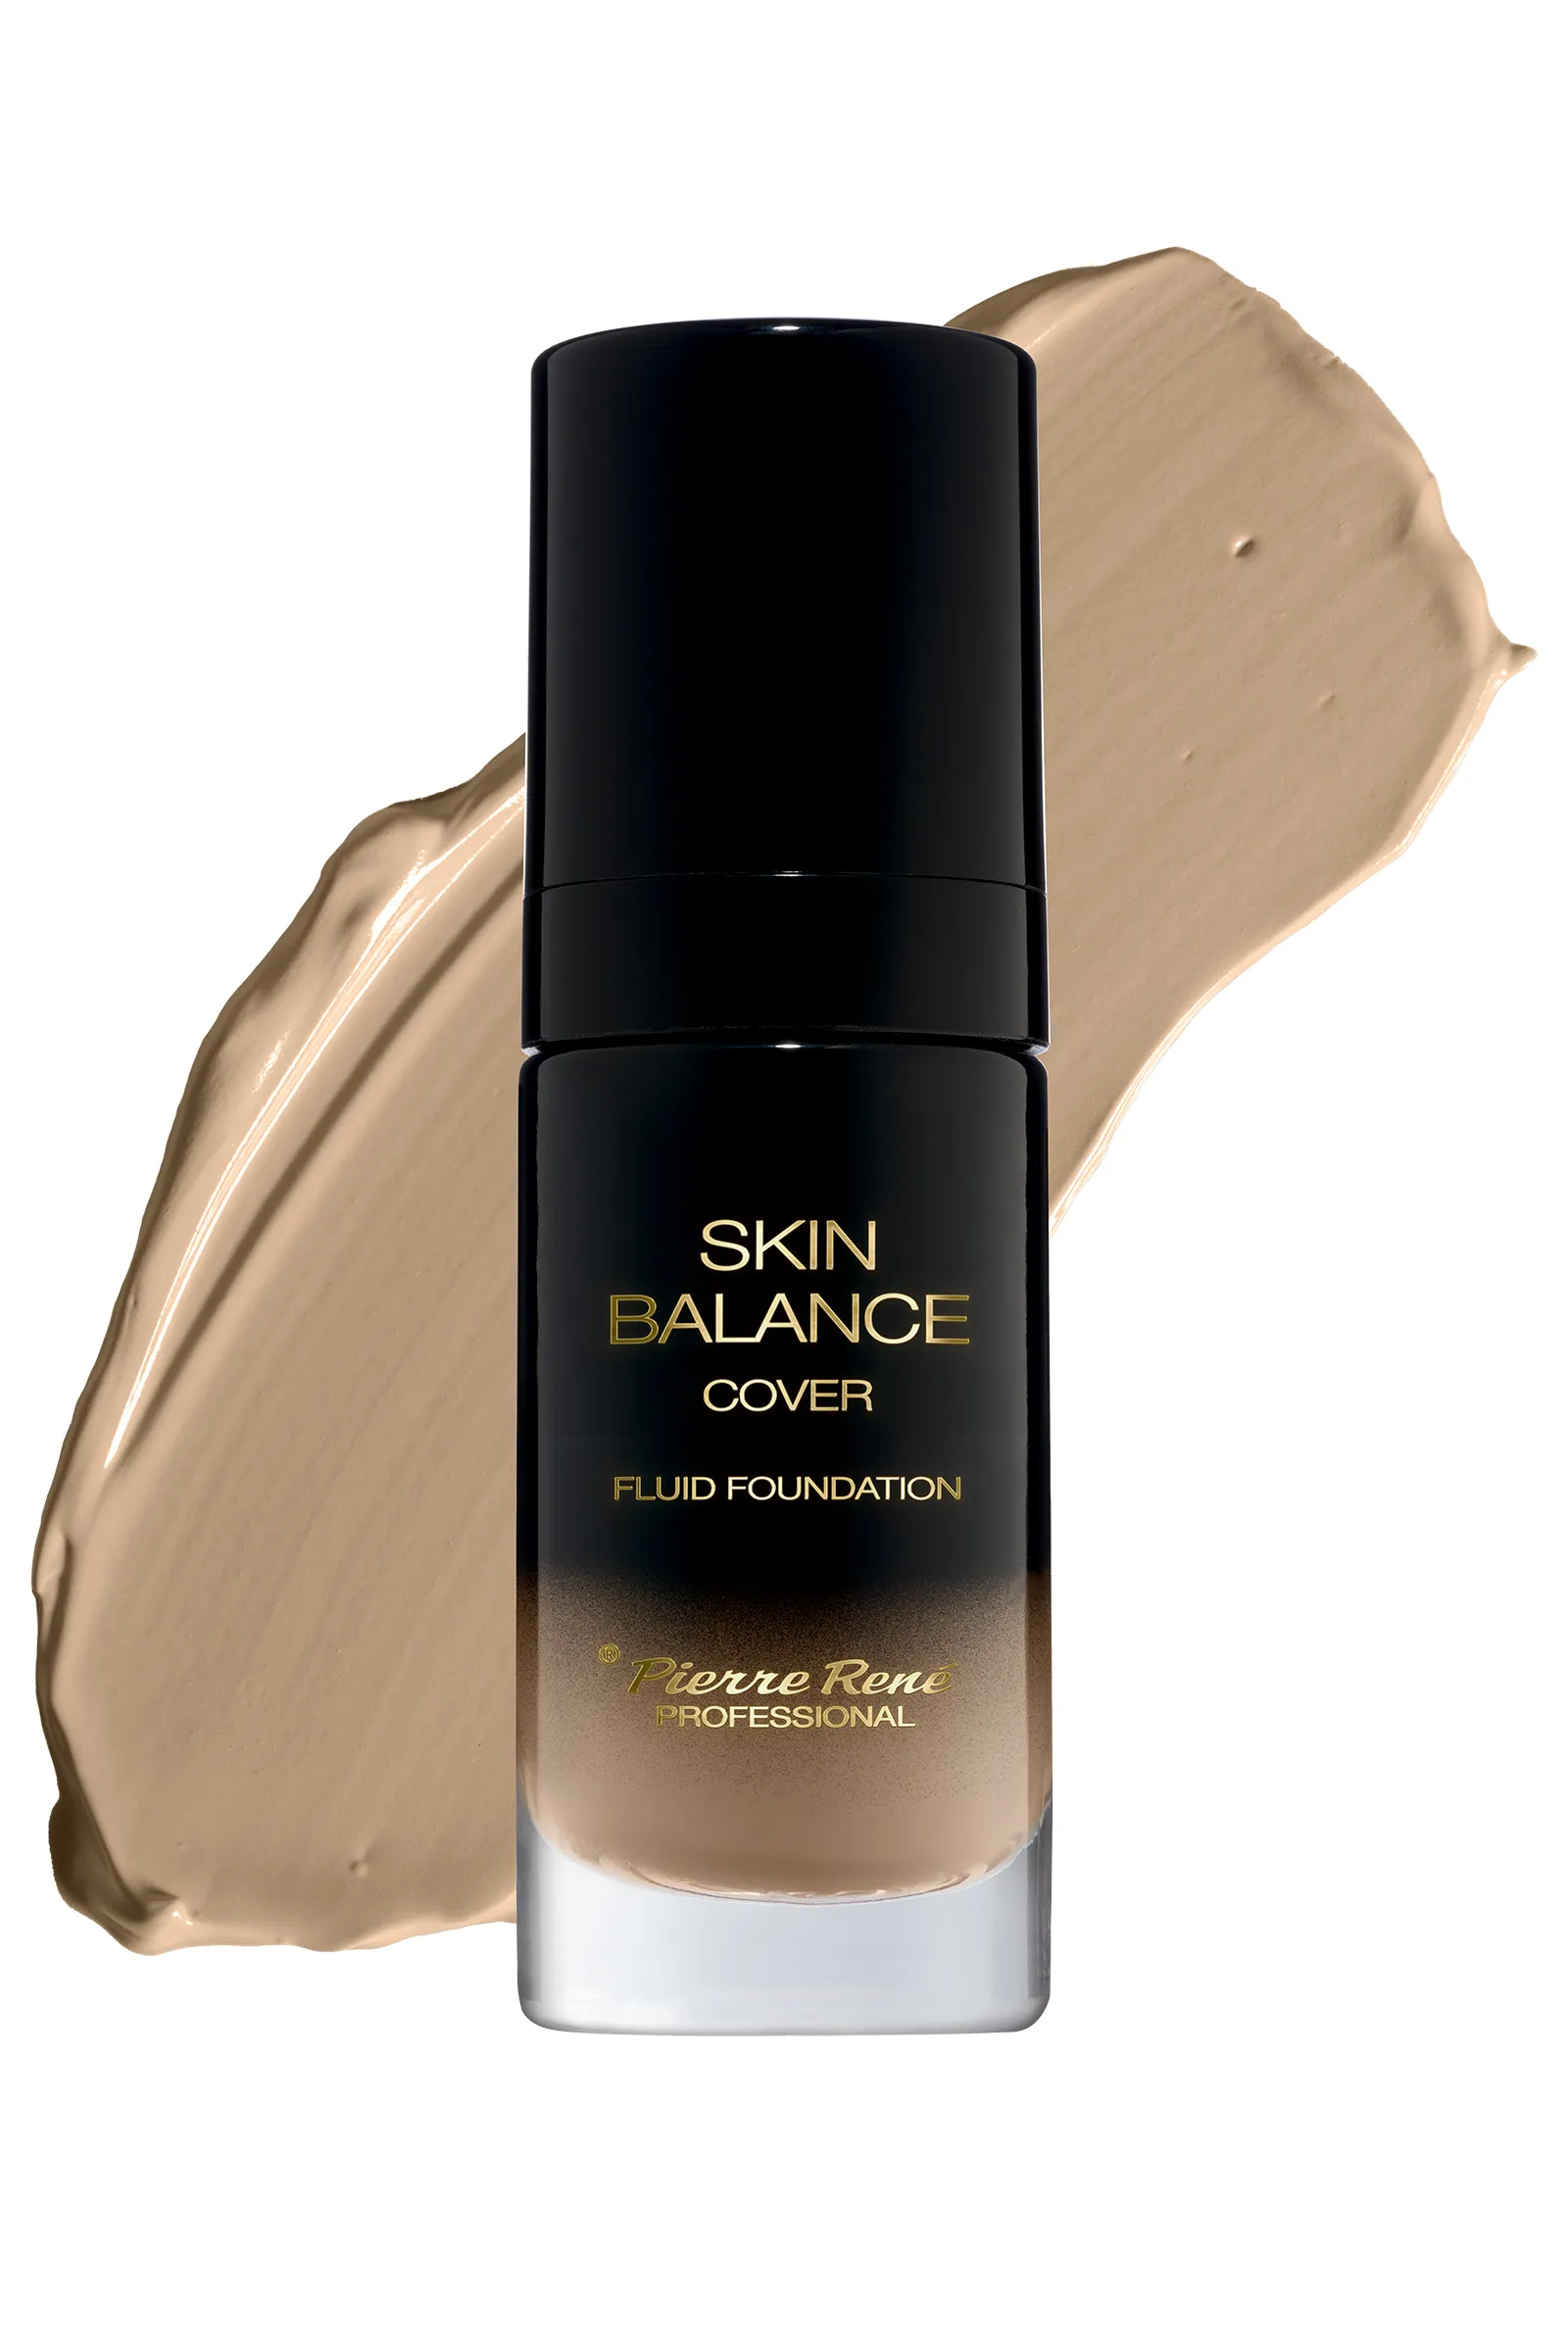 Pierre Rene Professional Skin Balance Cover fluid 26, 30 ml